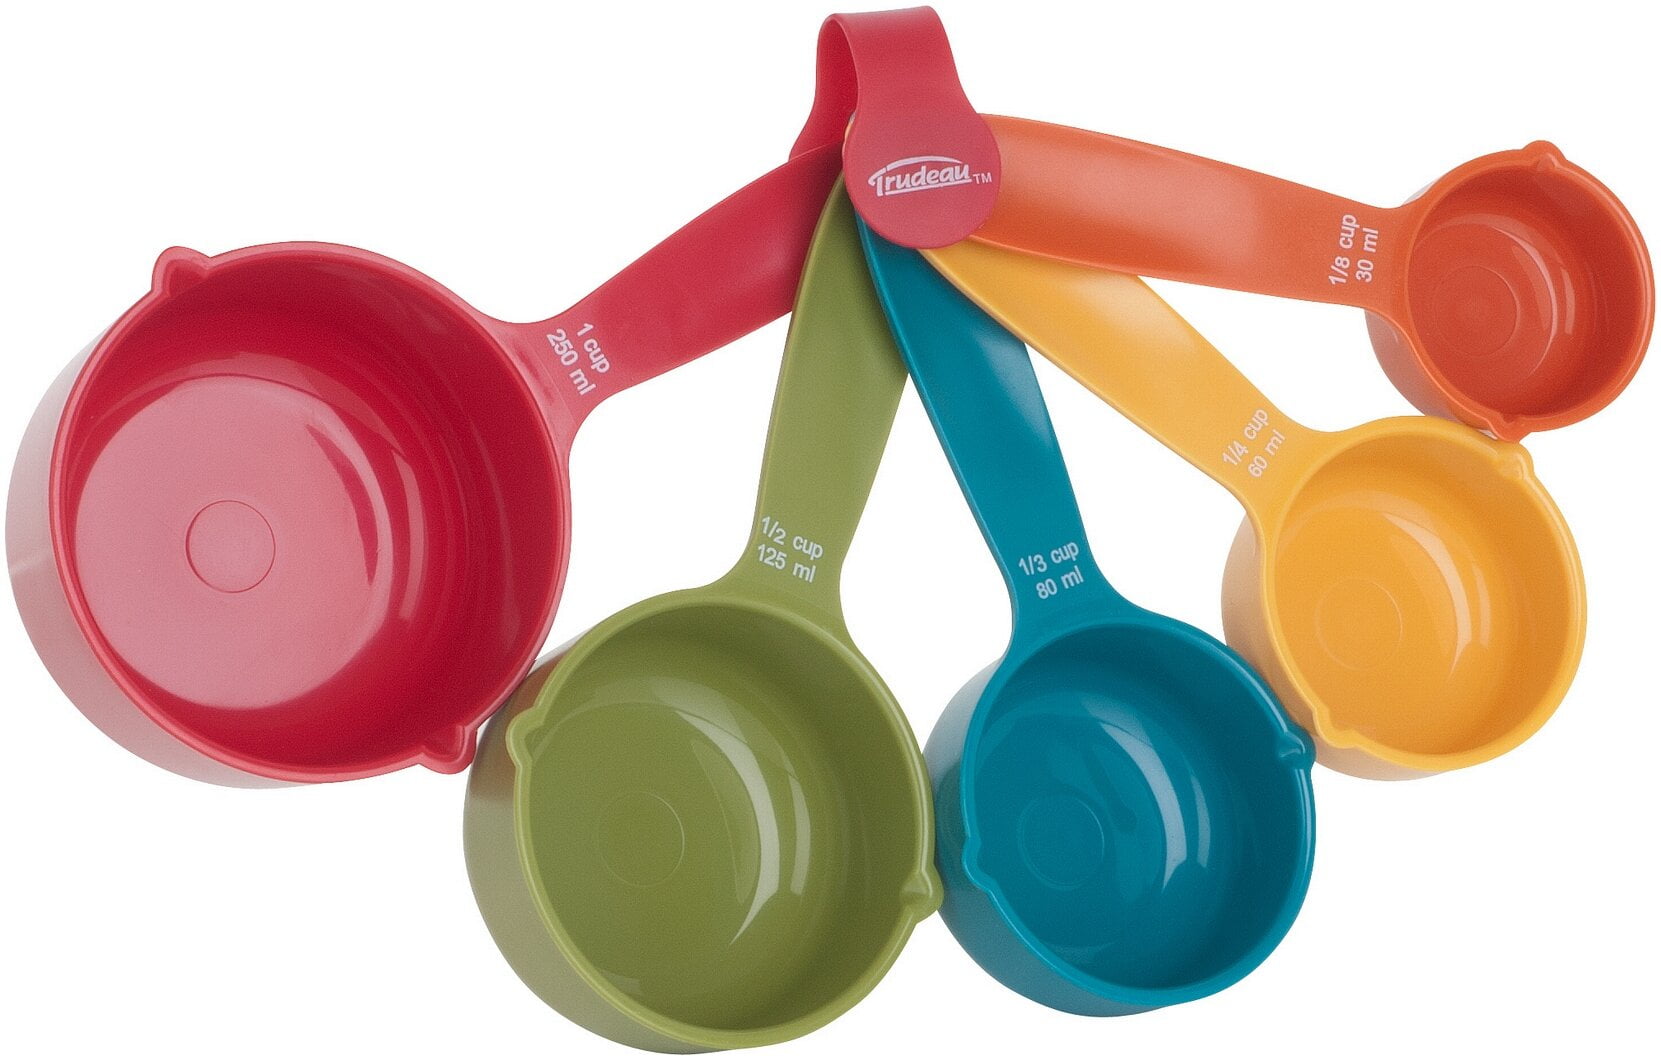 Trudeau Plastic Measuring Cups & Spoons